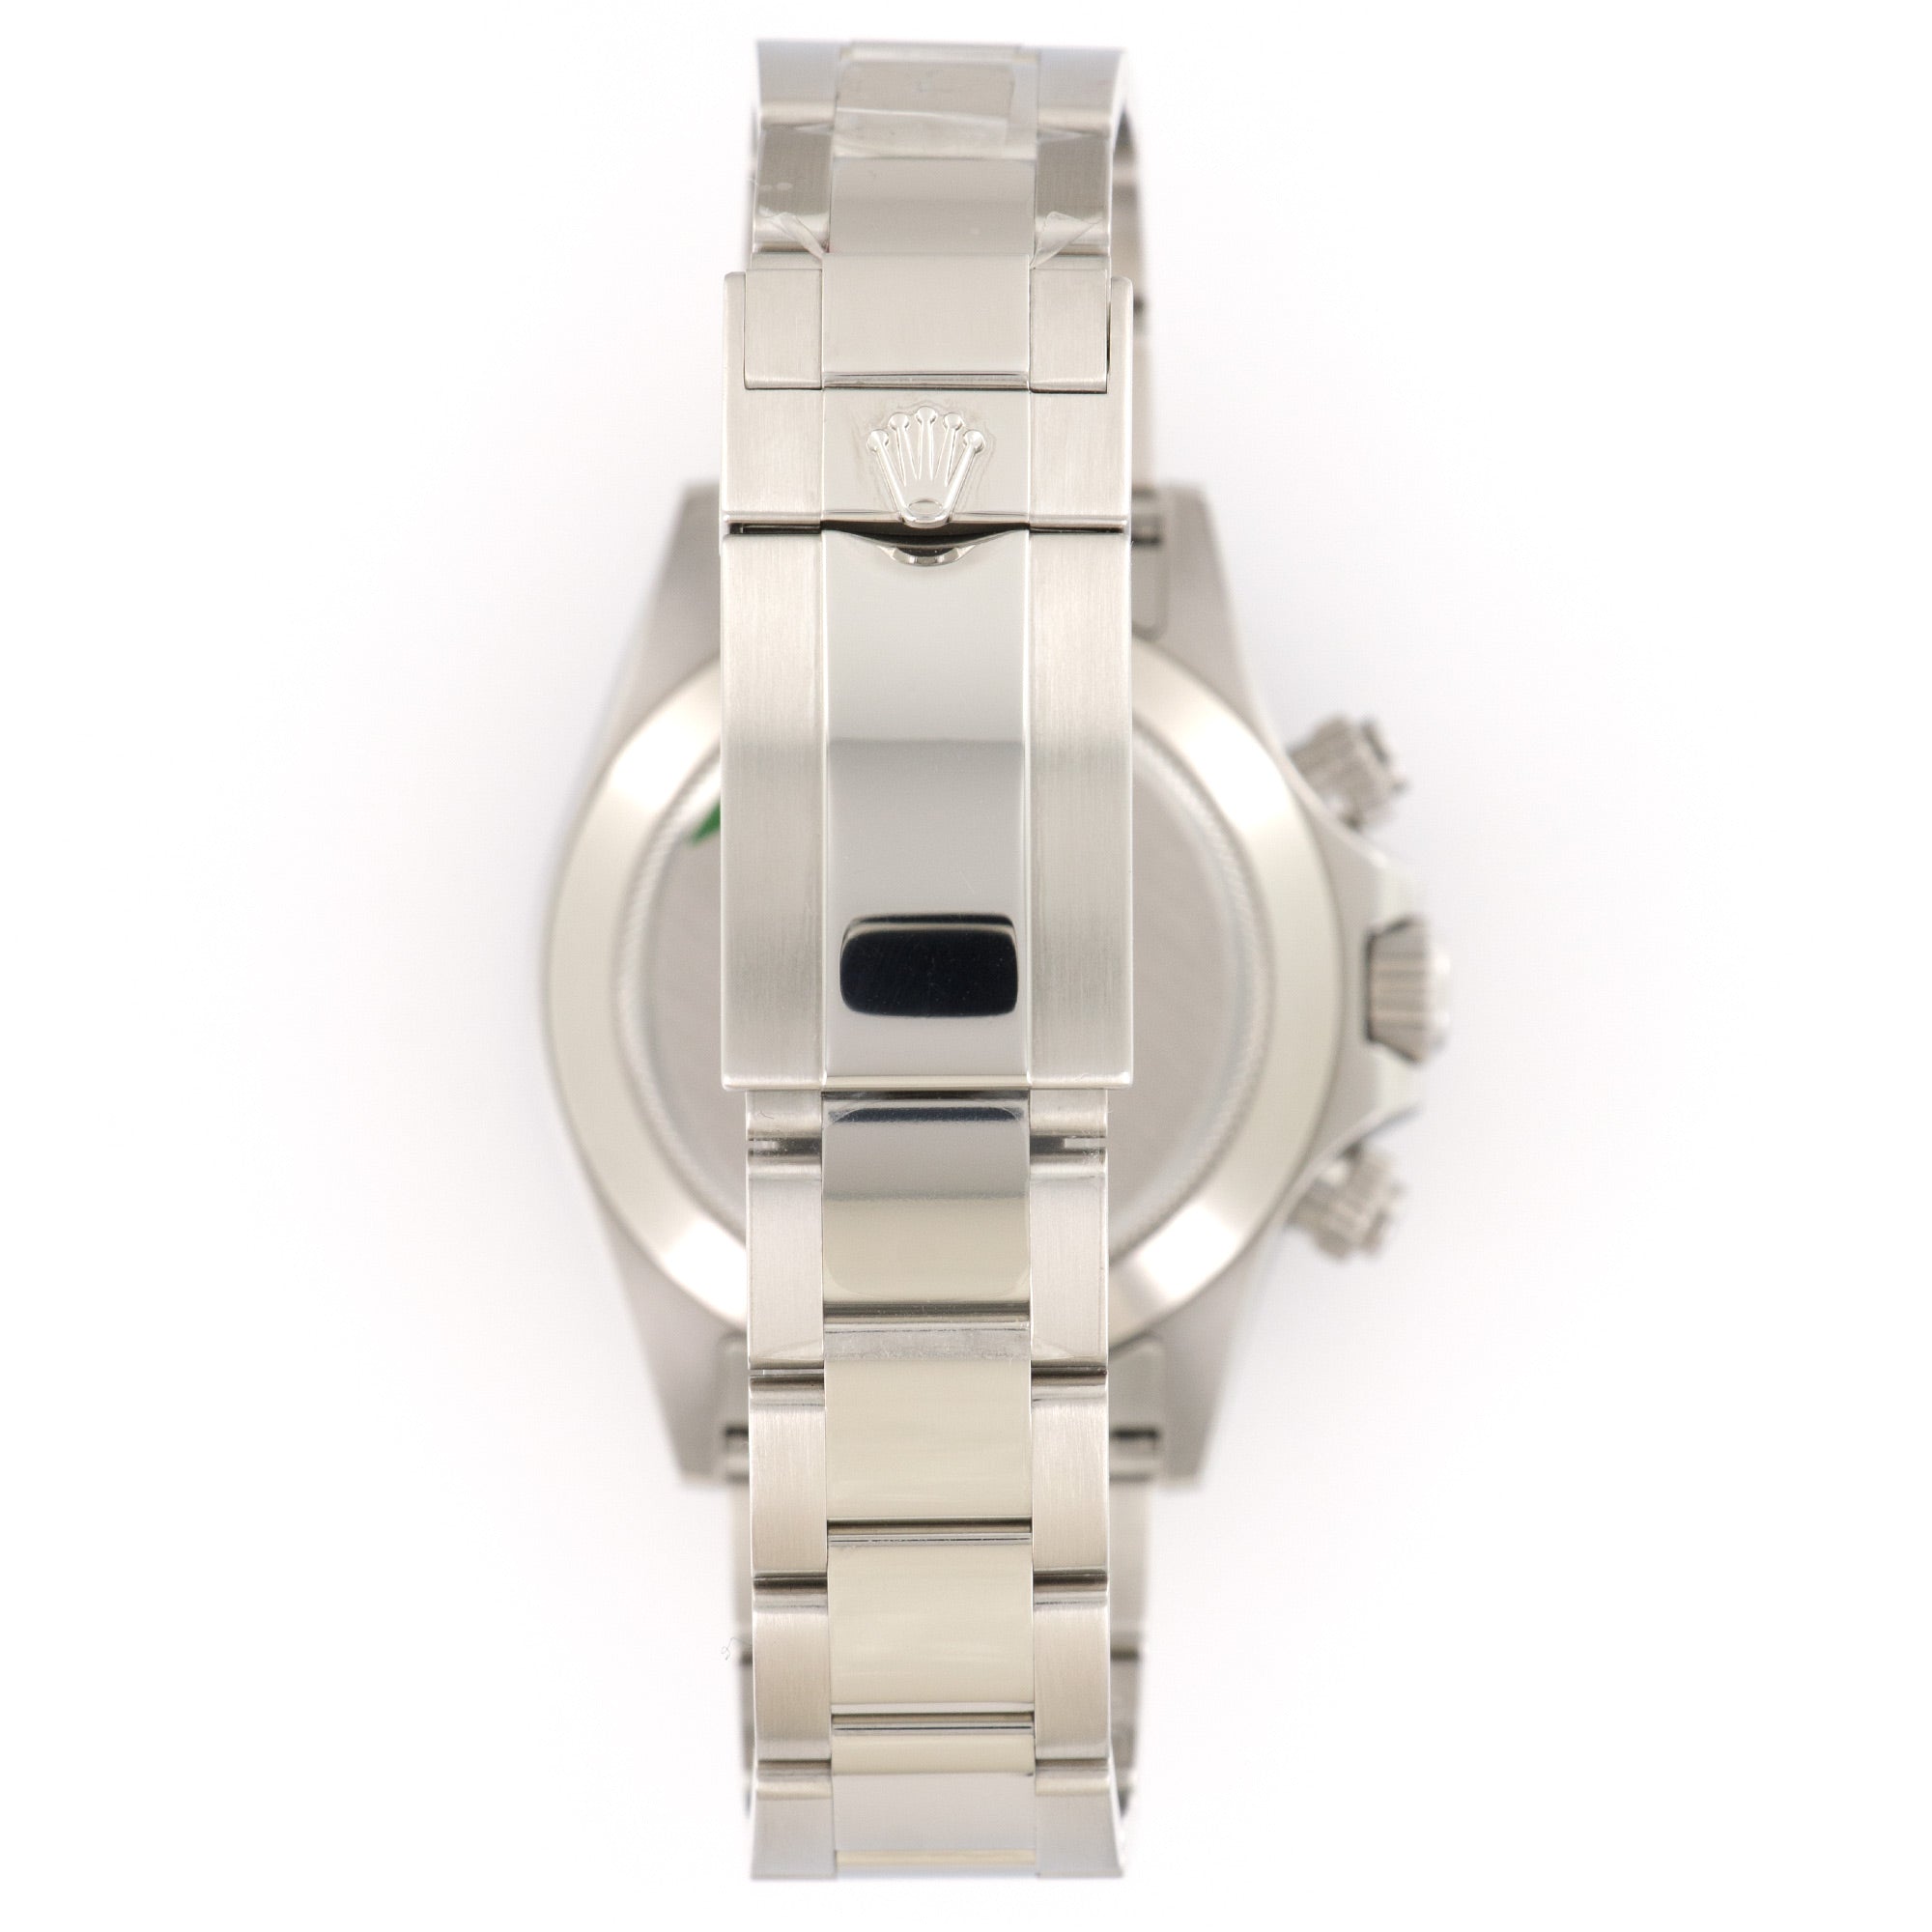 Rolex Cosmograph Daytona Watch Ref. 116520